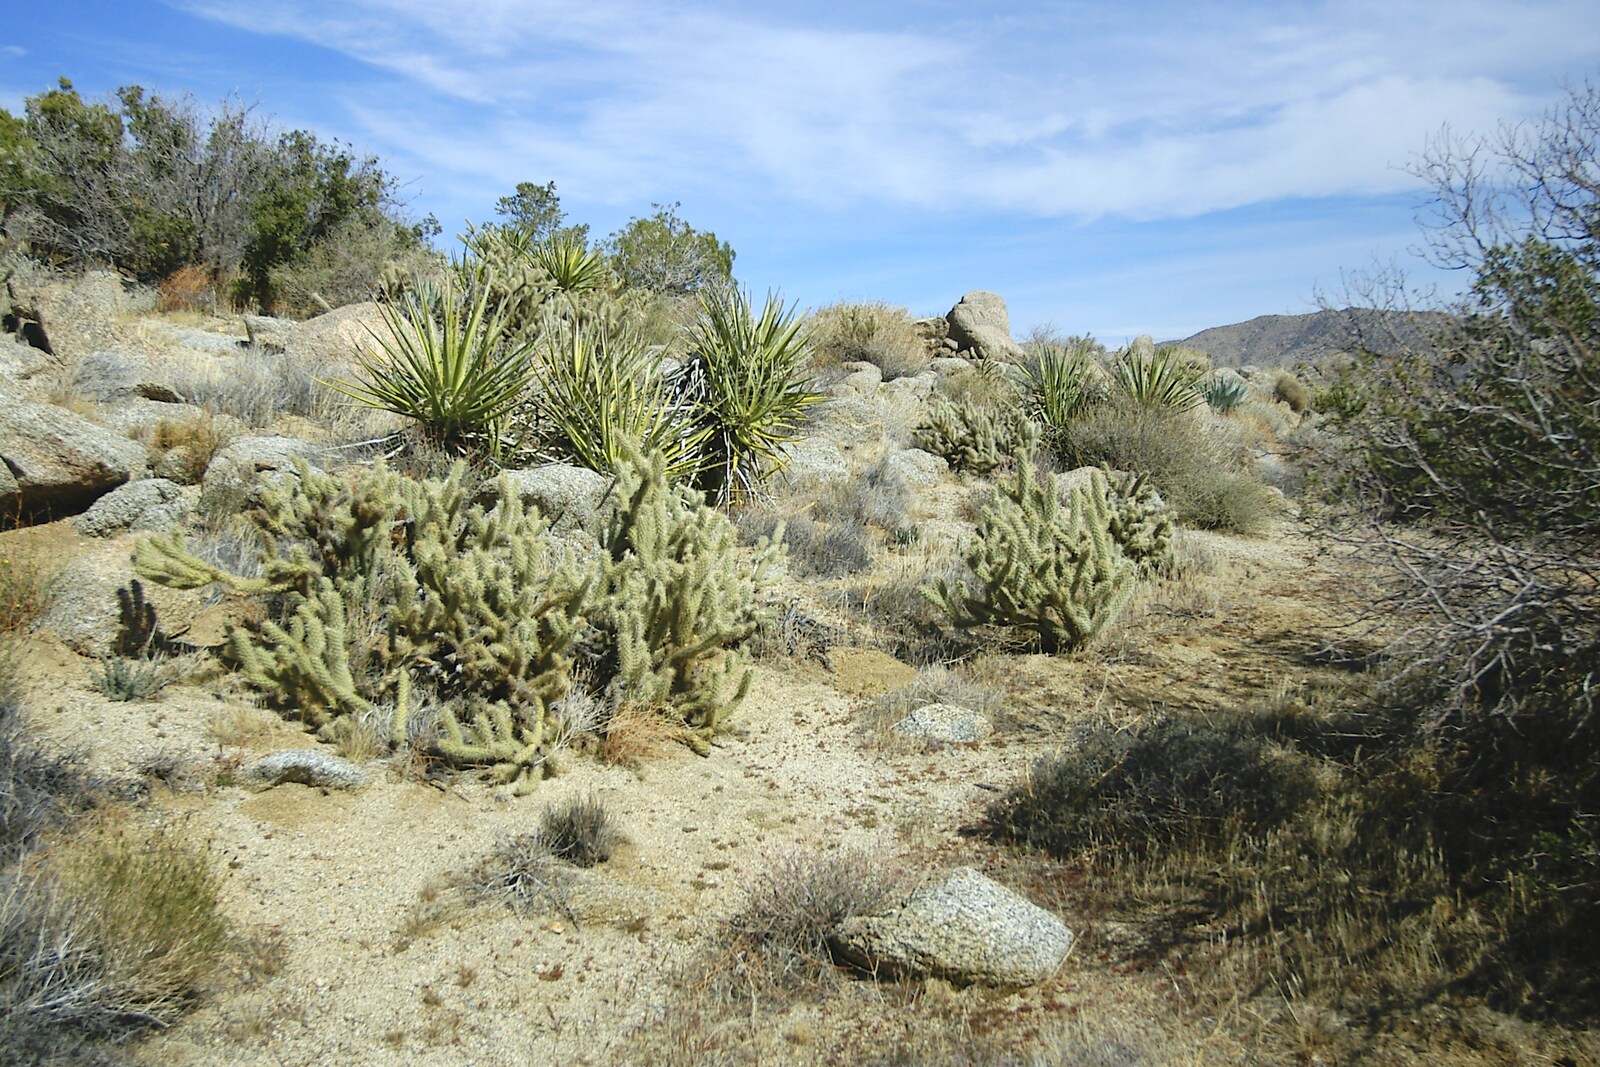 More desert cacti from Mojave Desert: San Diego to Joshua Tree and Twentynine Palms, California, US - 5th March 2006